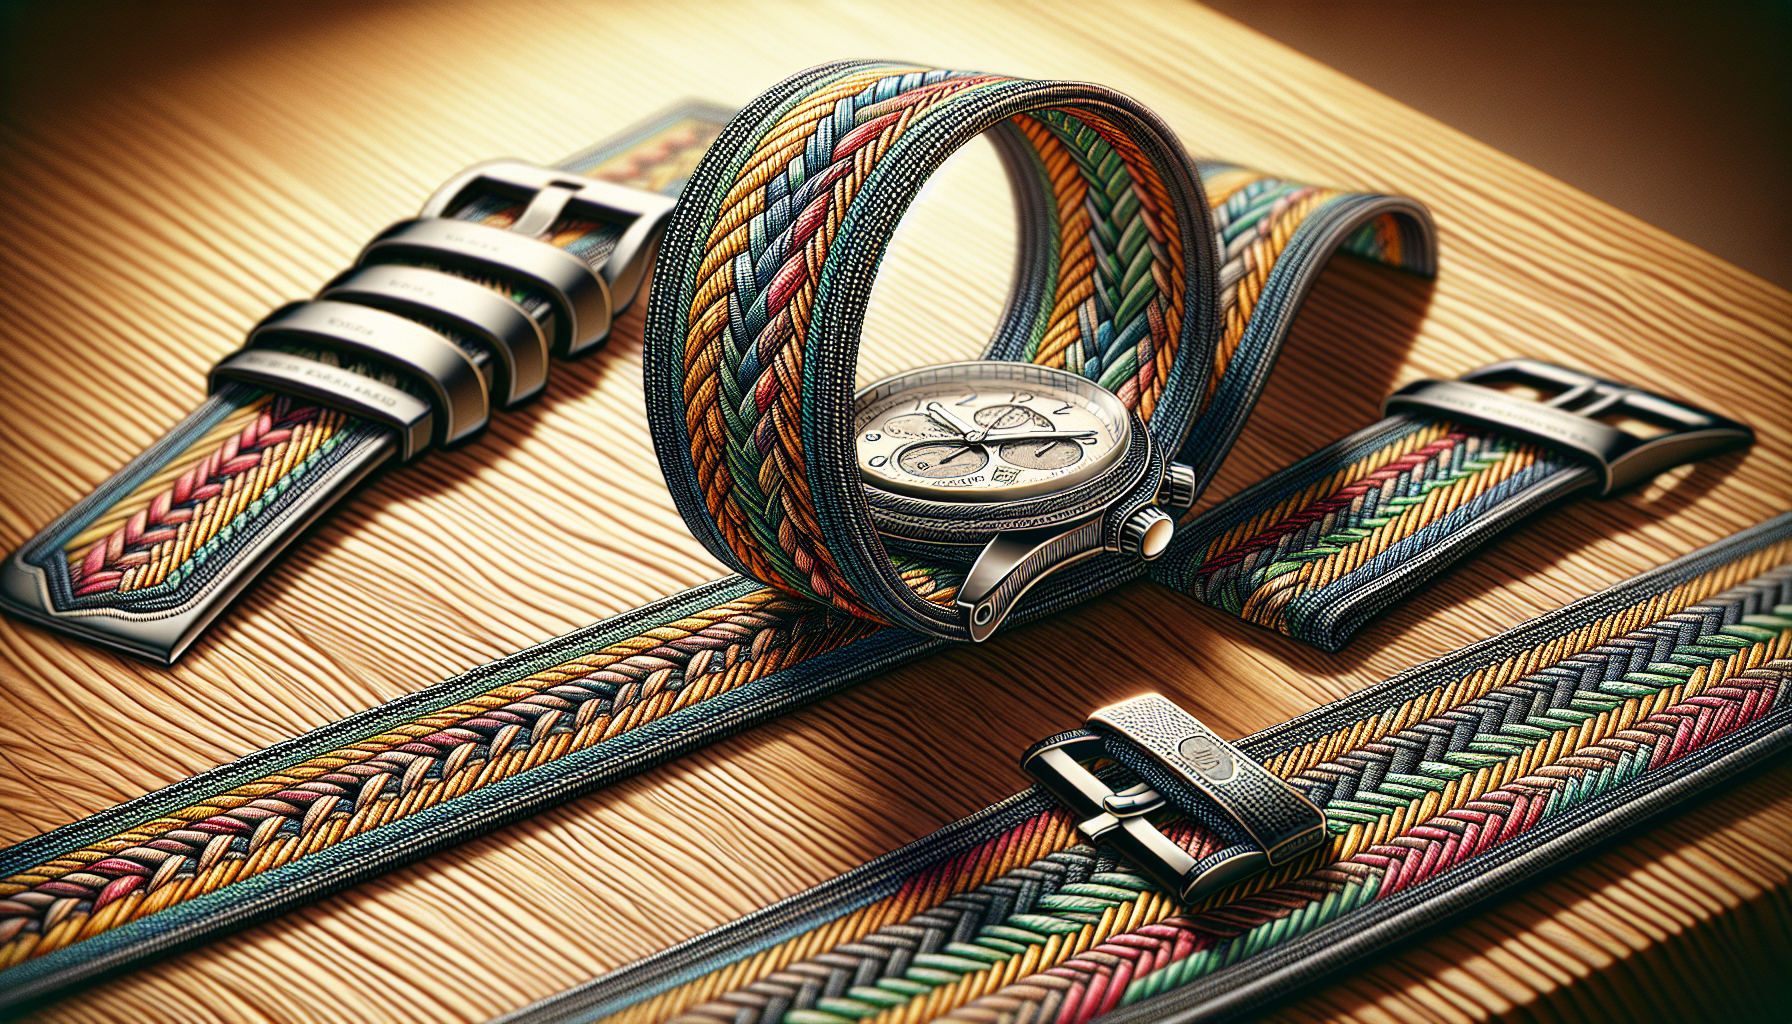 Illustration of Swedish-made Perlon watch straps